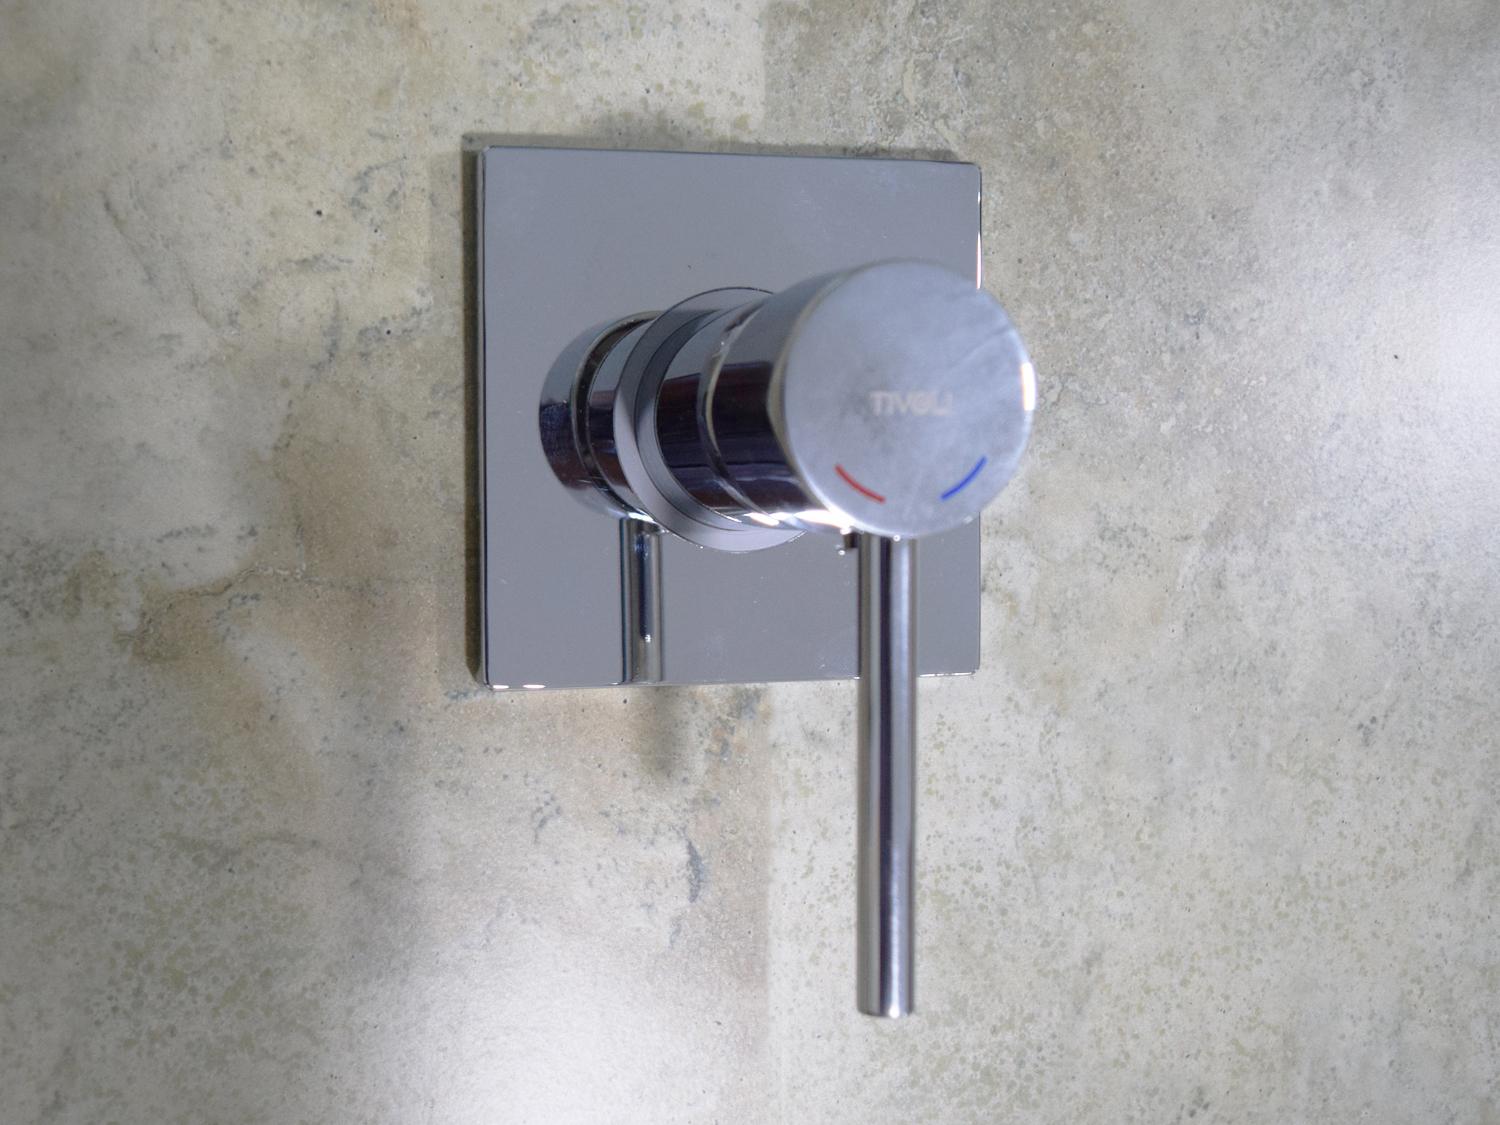 Tivoli Porta Romana Chrome Bath/Shower Mixer Tap